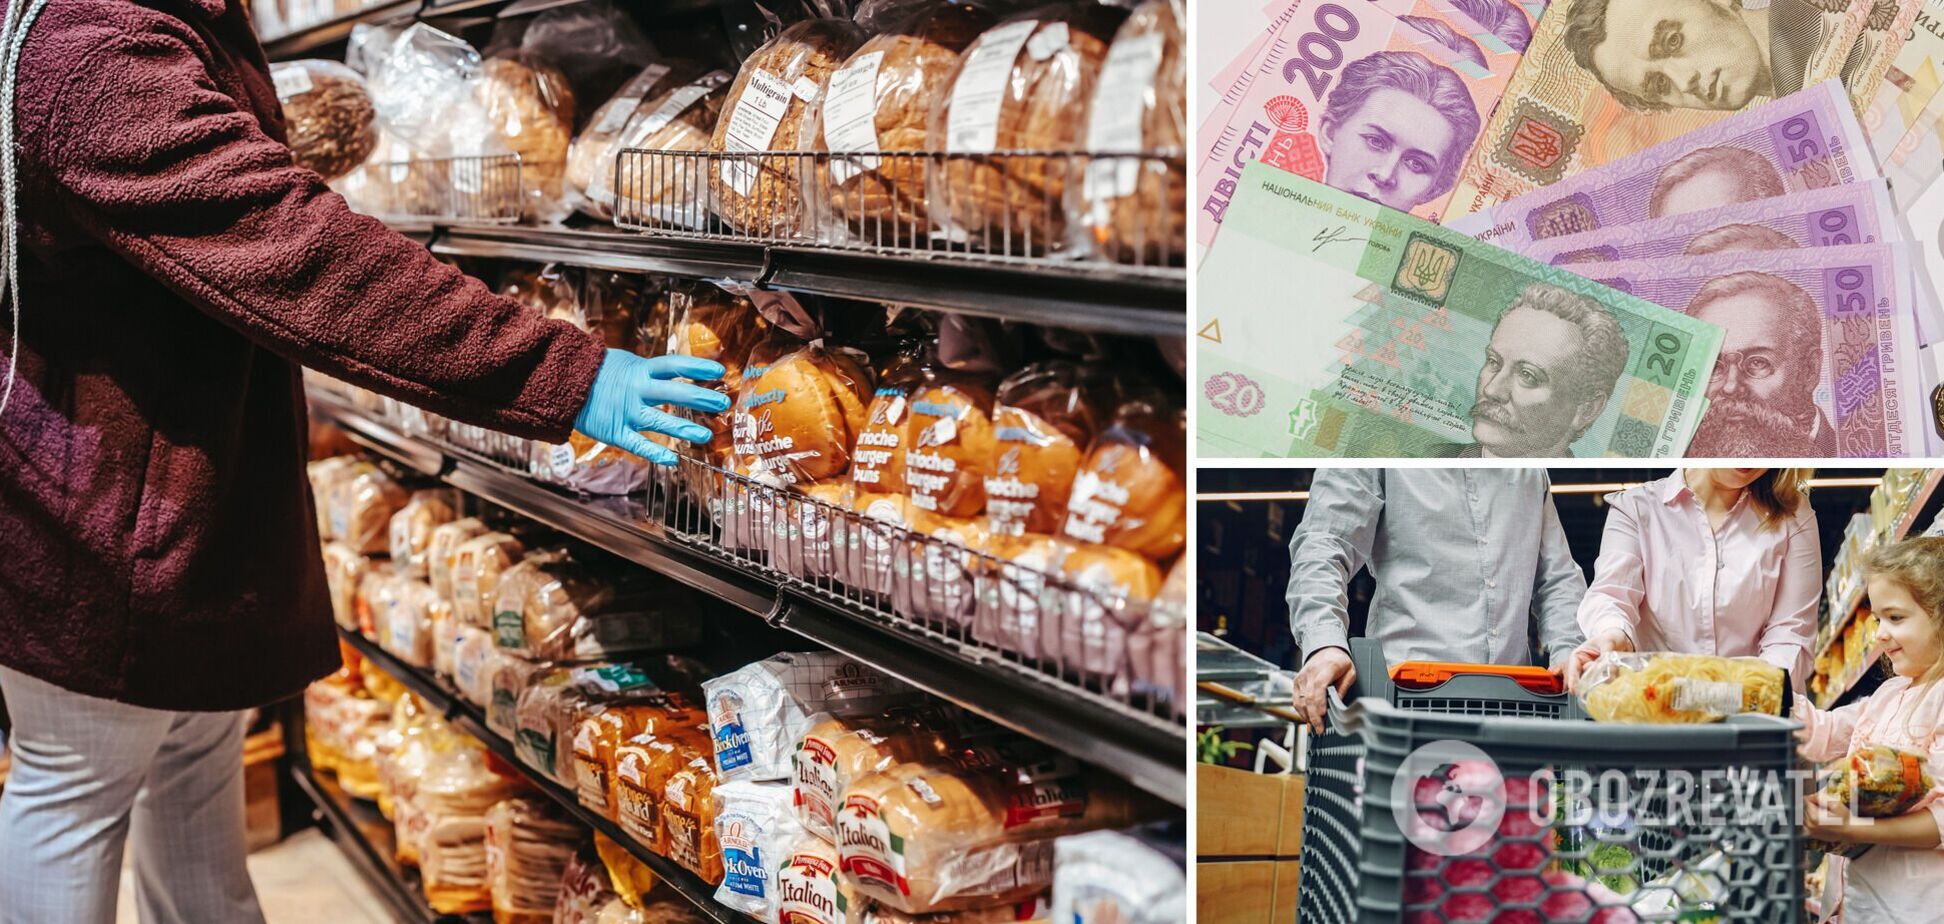 Цены на хлеб в Украине вырастут